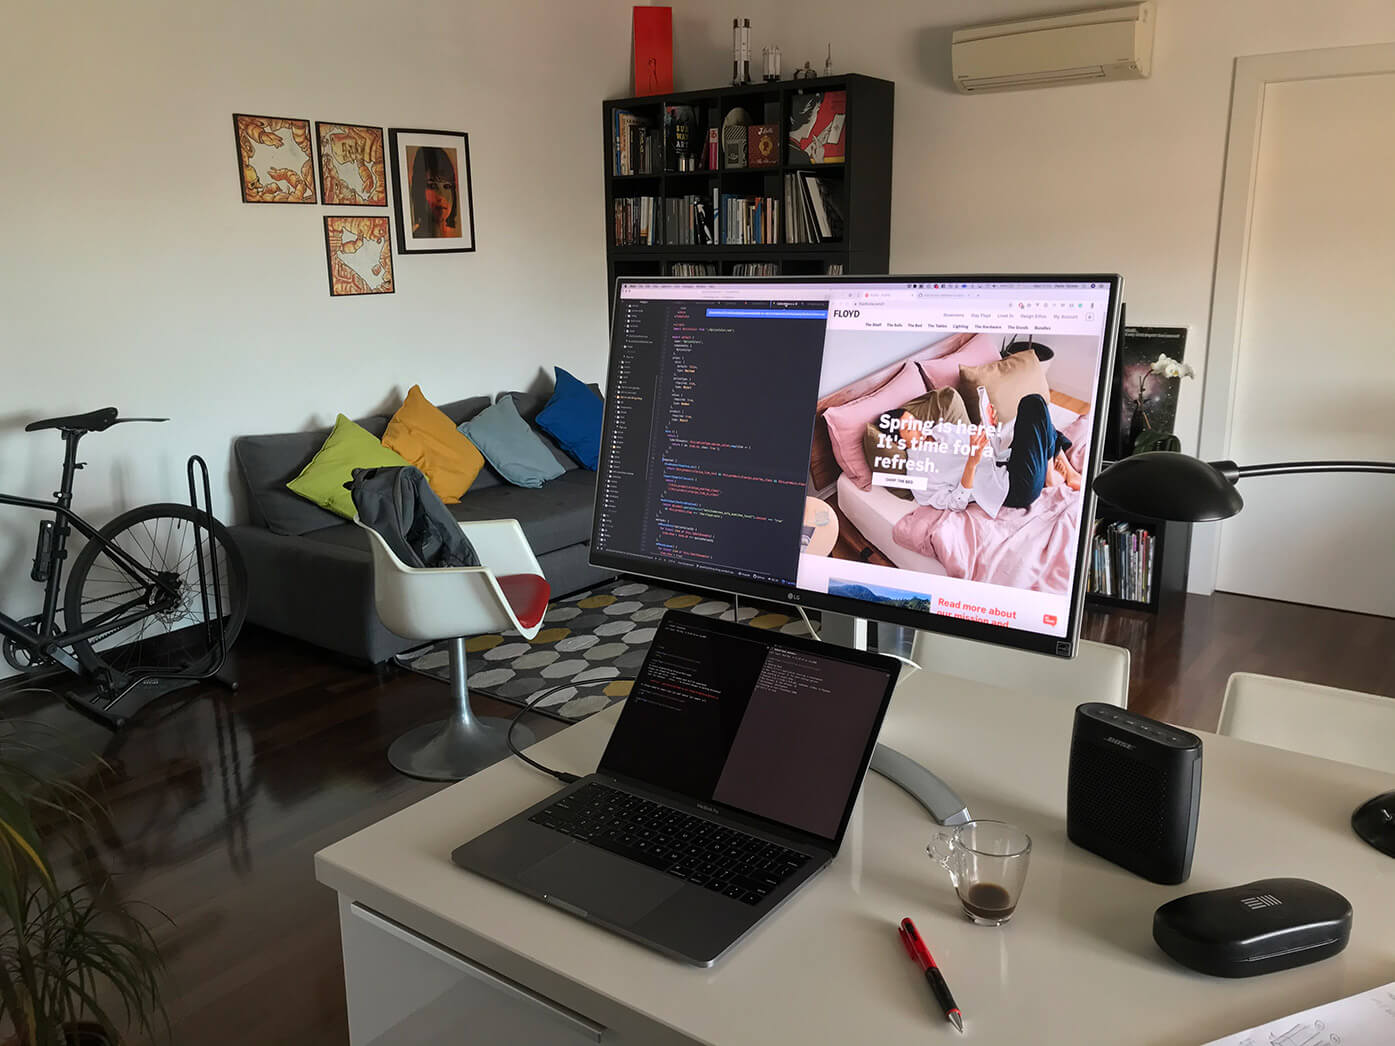 Paolo's home office setup